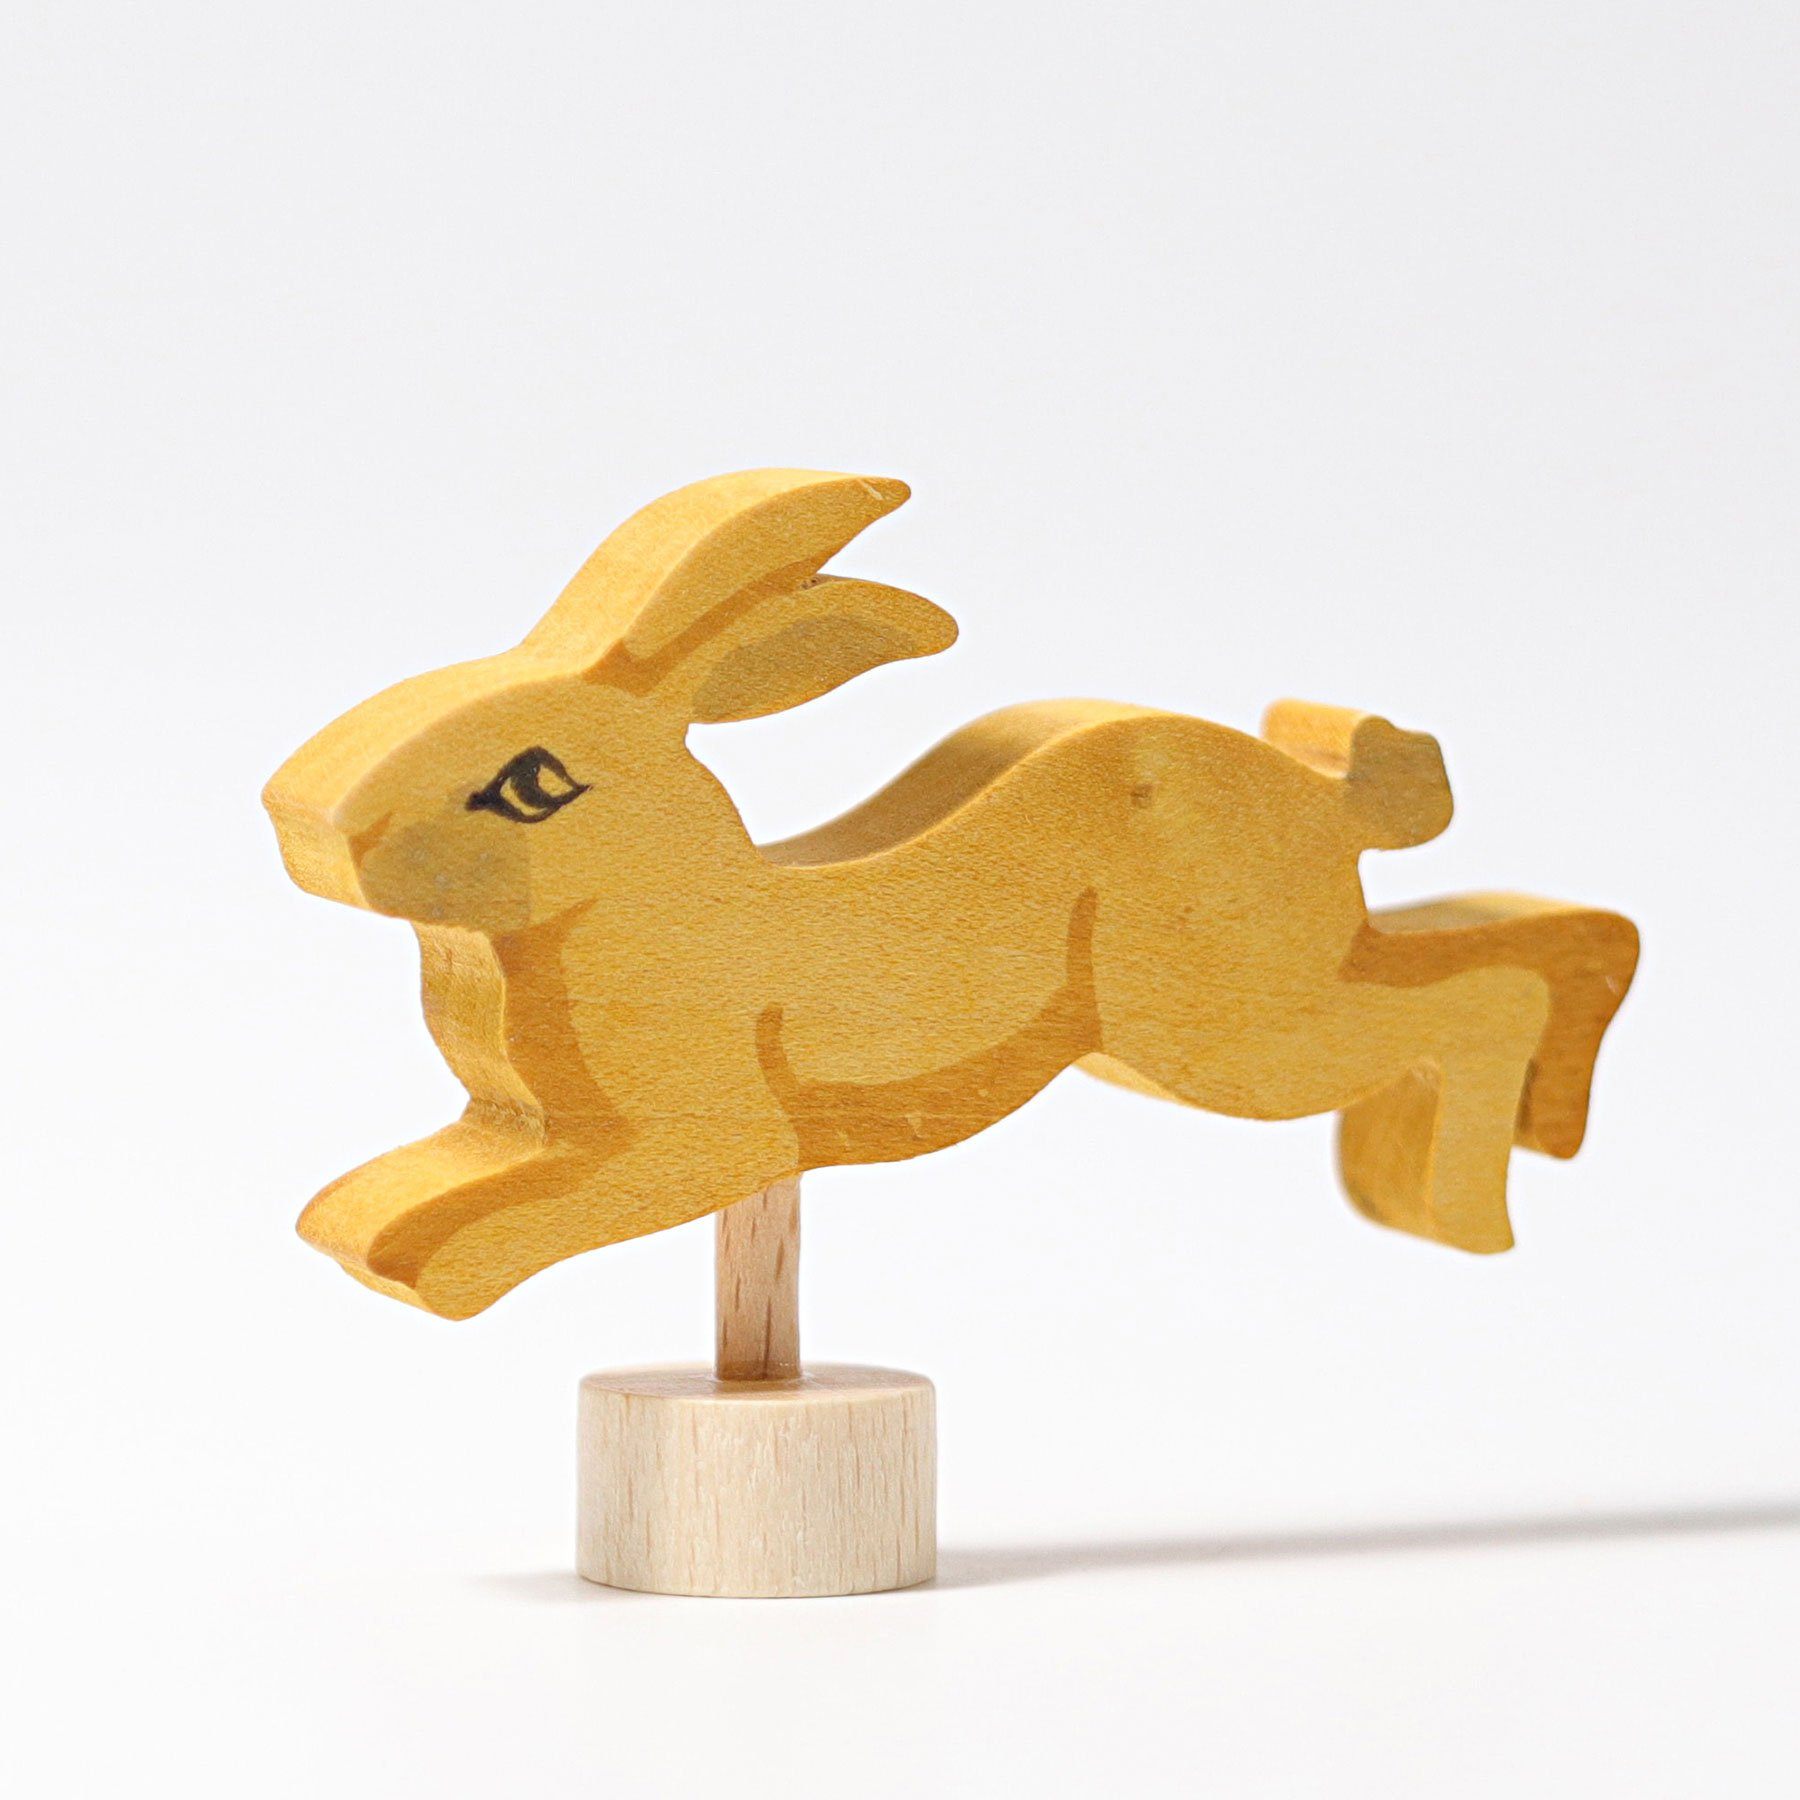 Grimm's Decorative Figure Jumping Rabbit